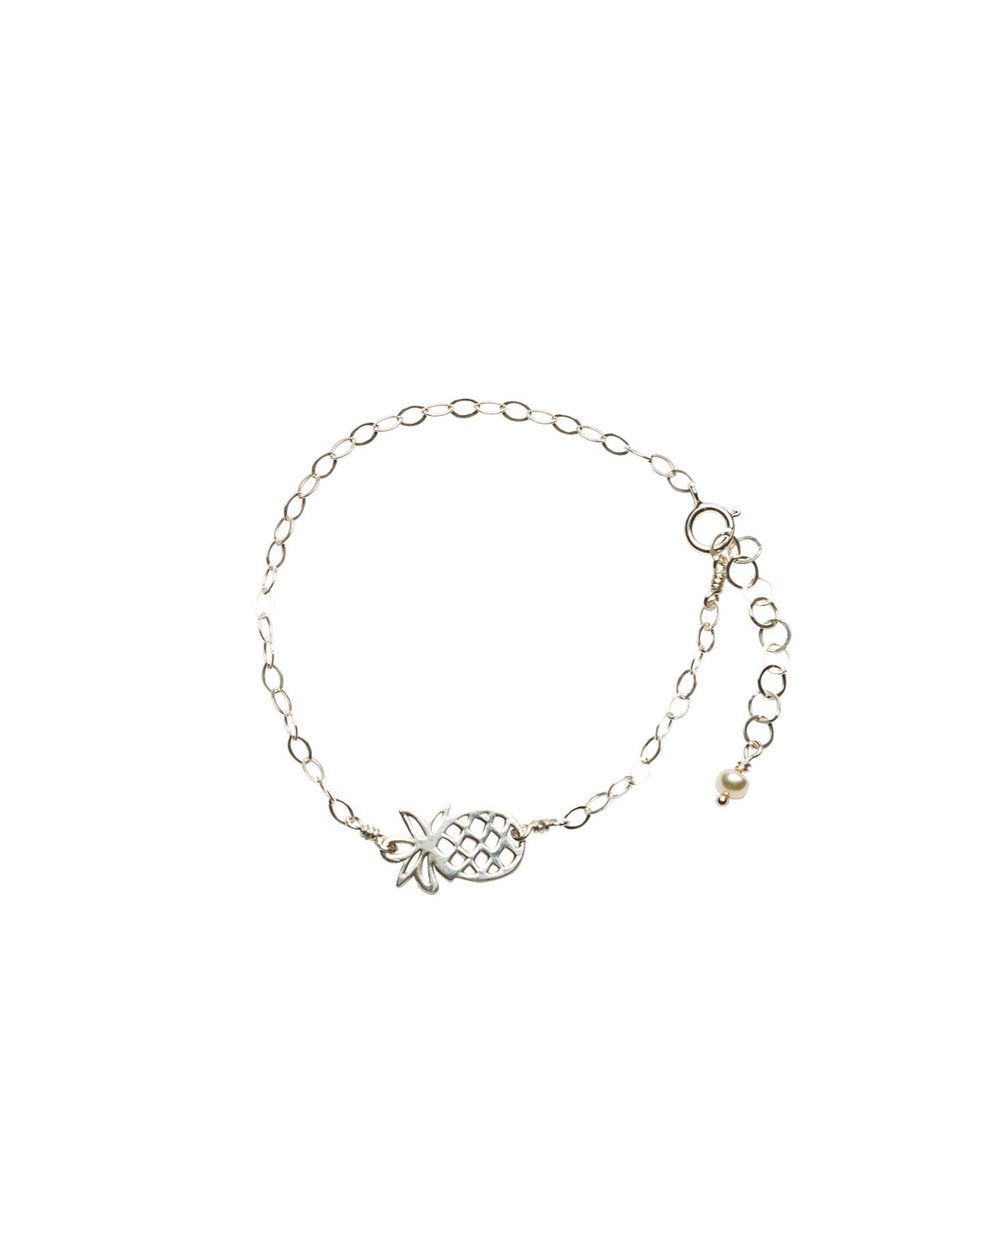 Pineapple Silhouette Chain bracelet